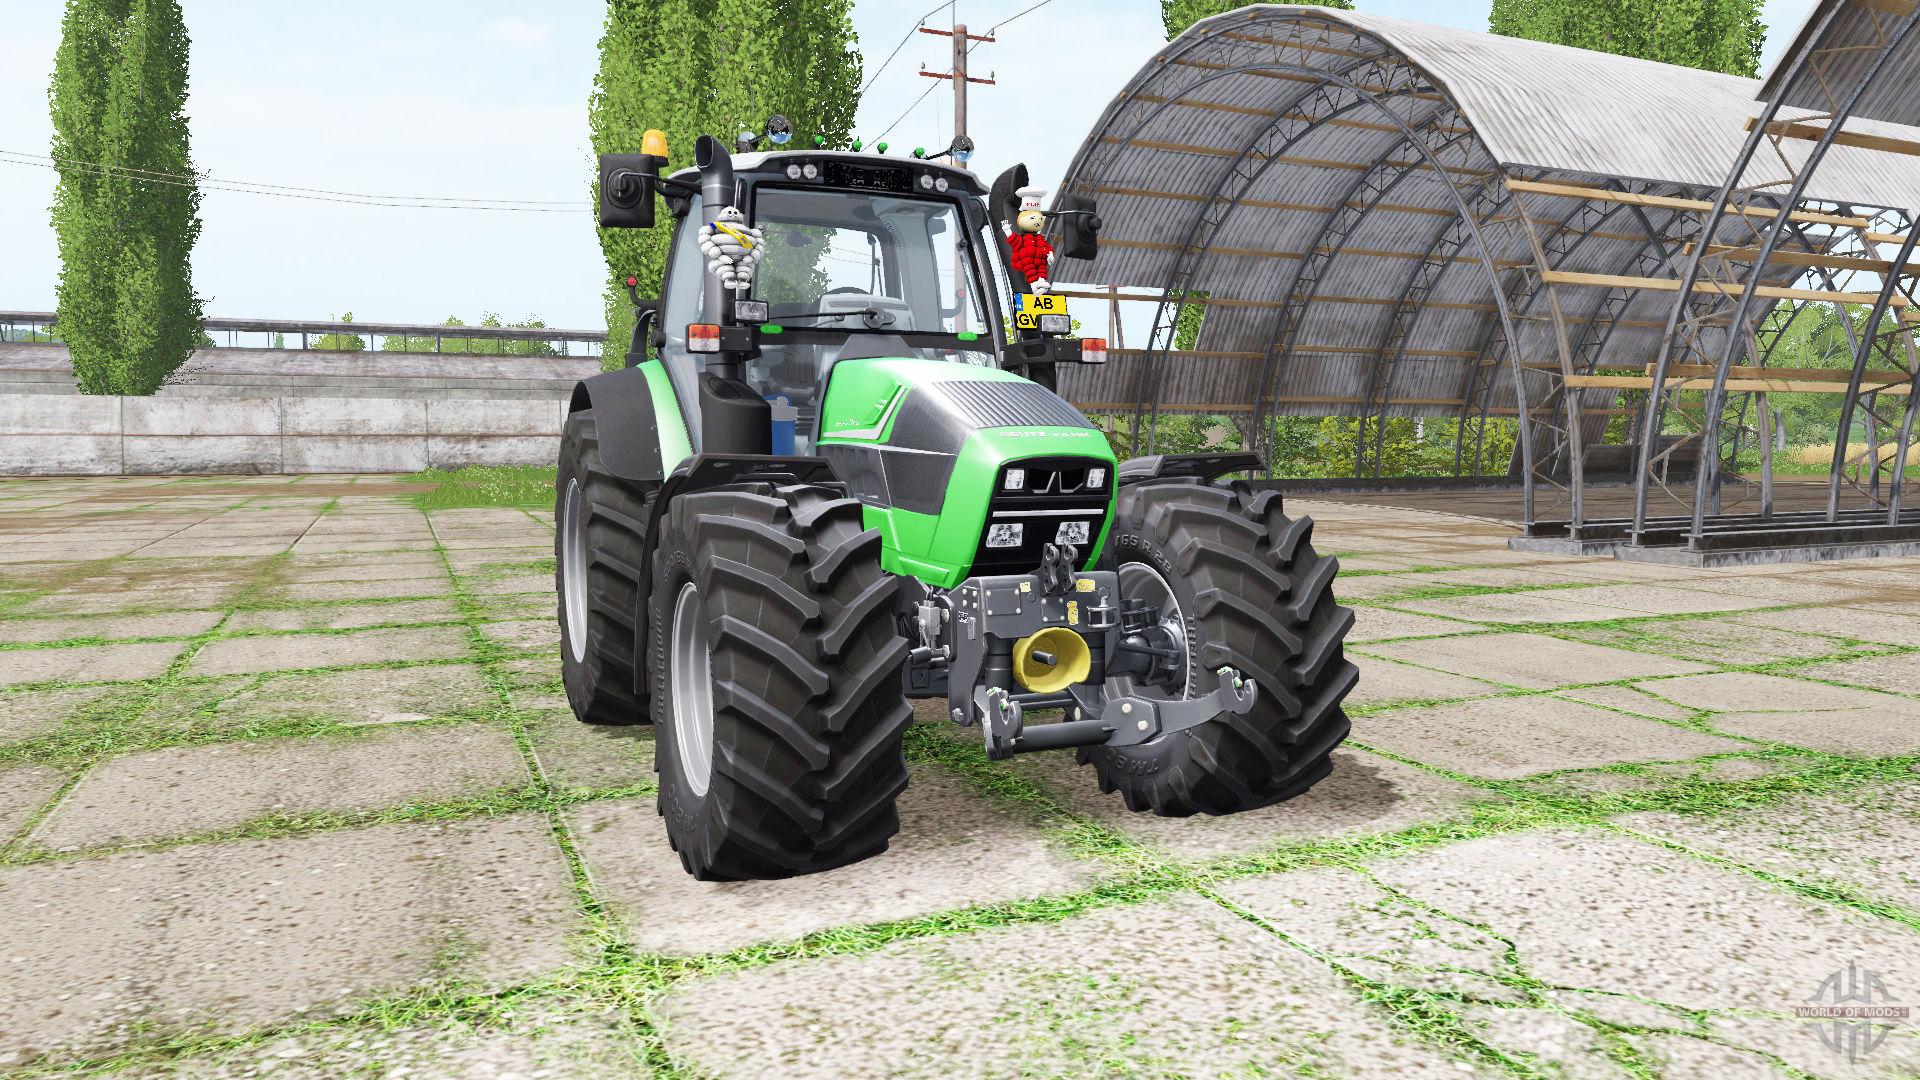 Deutz Fahr Agrotron 620 Ttv V10 Fs17 Farming Simulator 17 Mod Fs 2017 Mod 8587